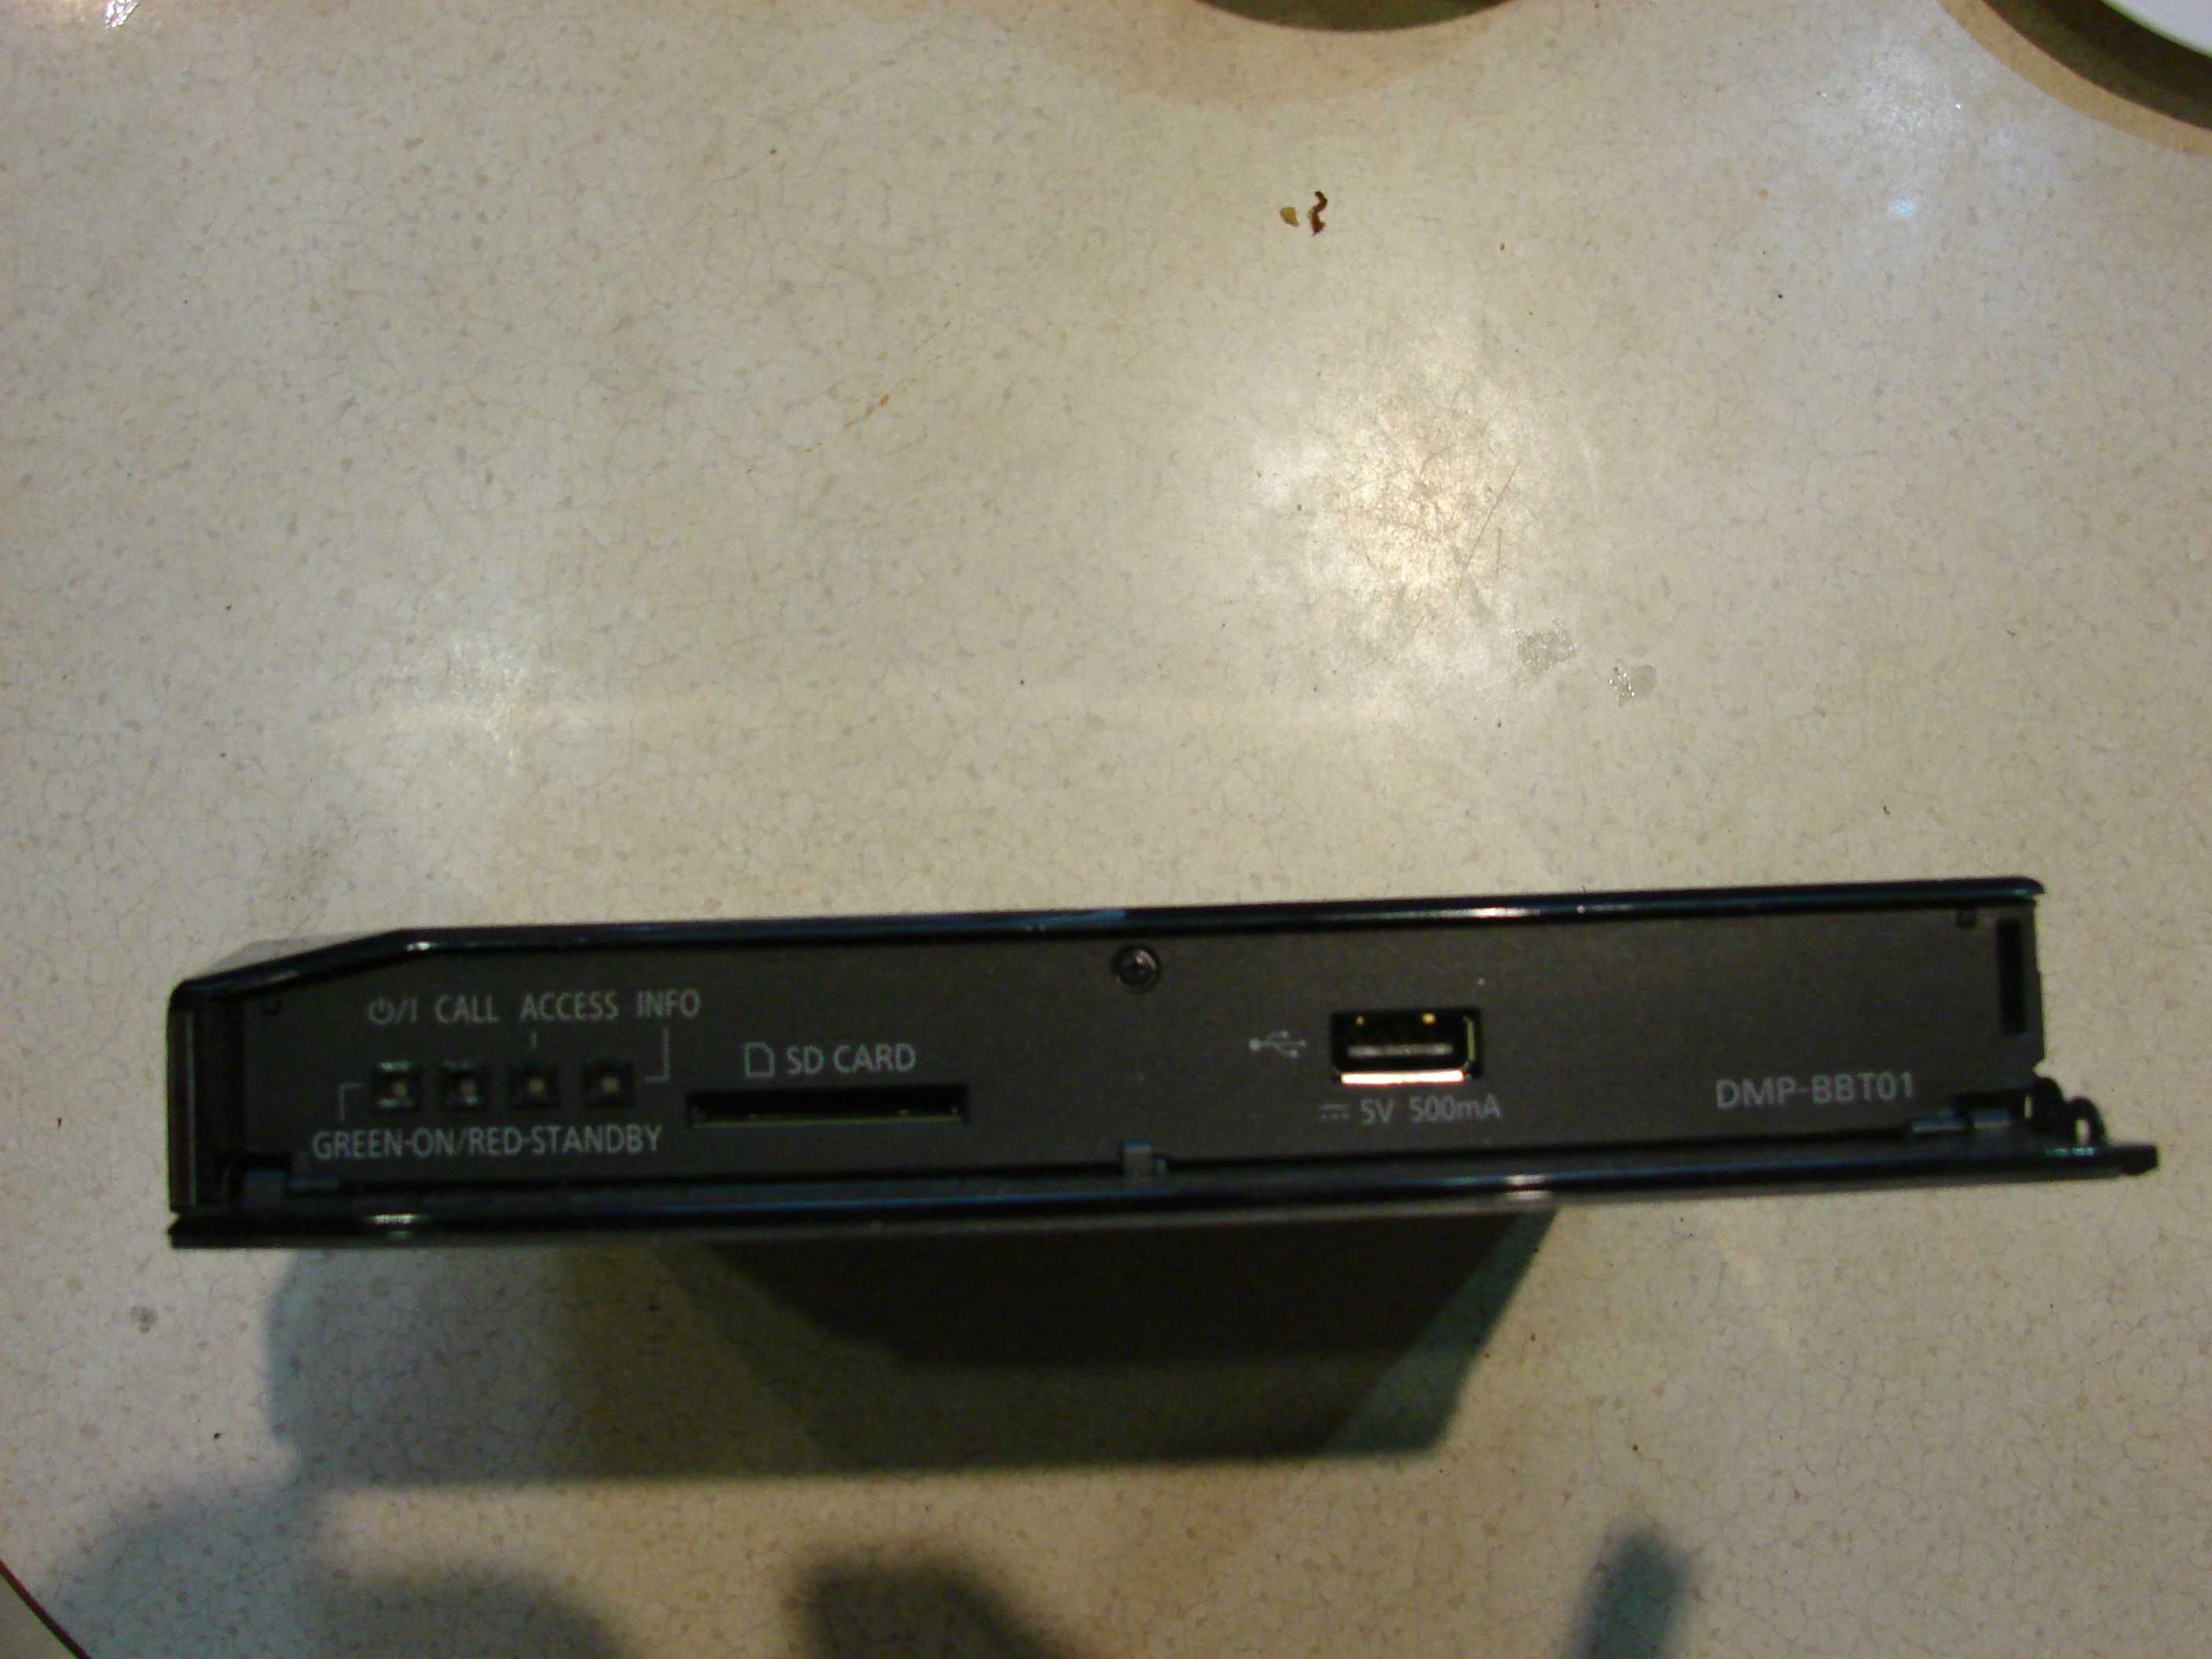 Odtwarzacz DVD Blu Ray Panasonic model DMP-BBT01